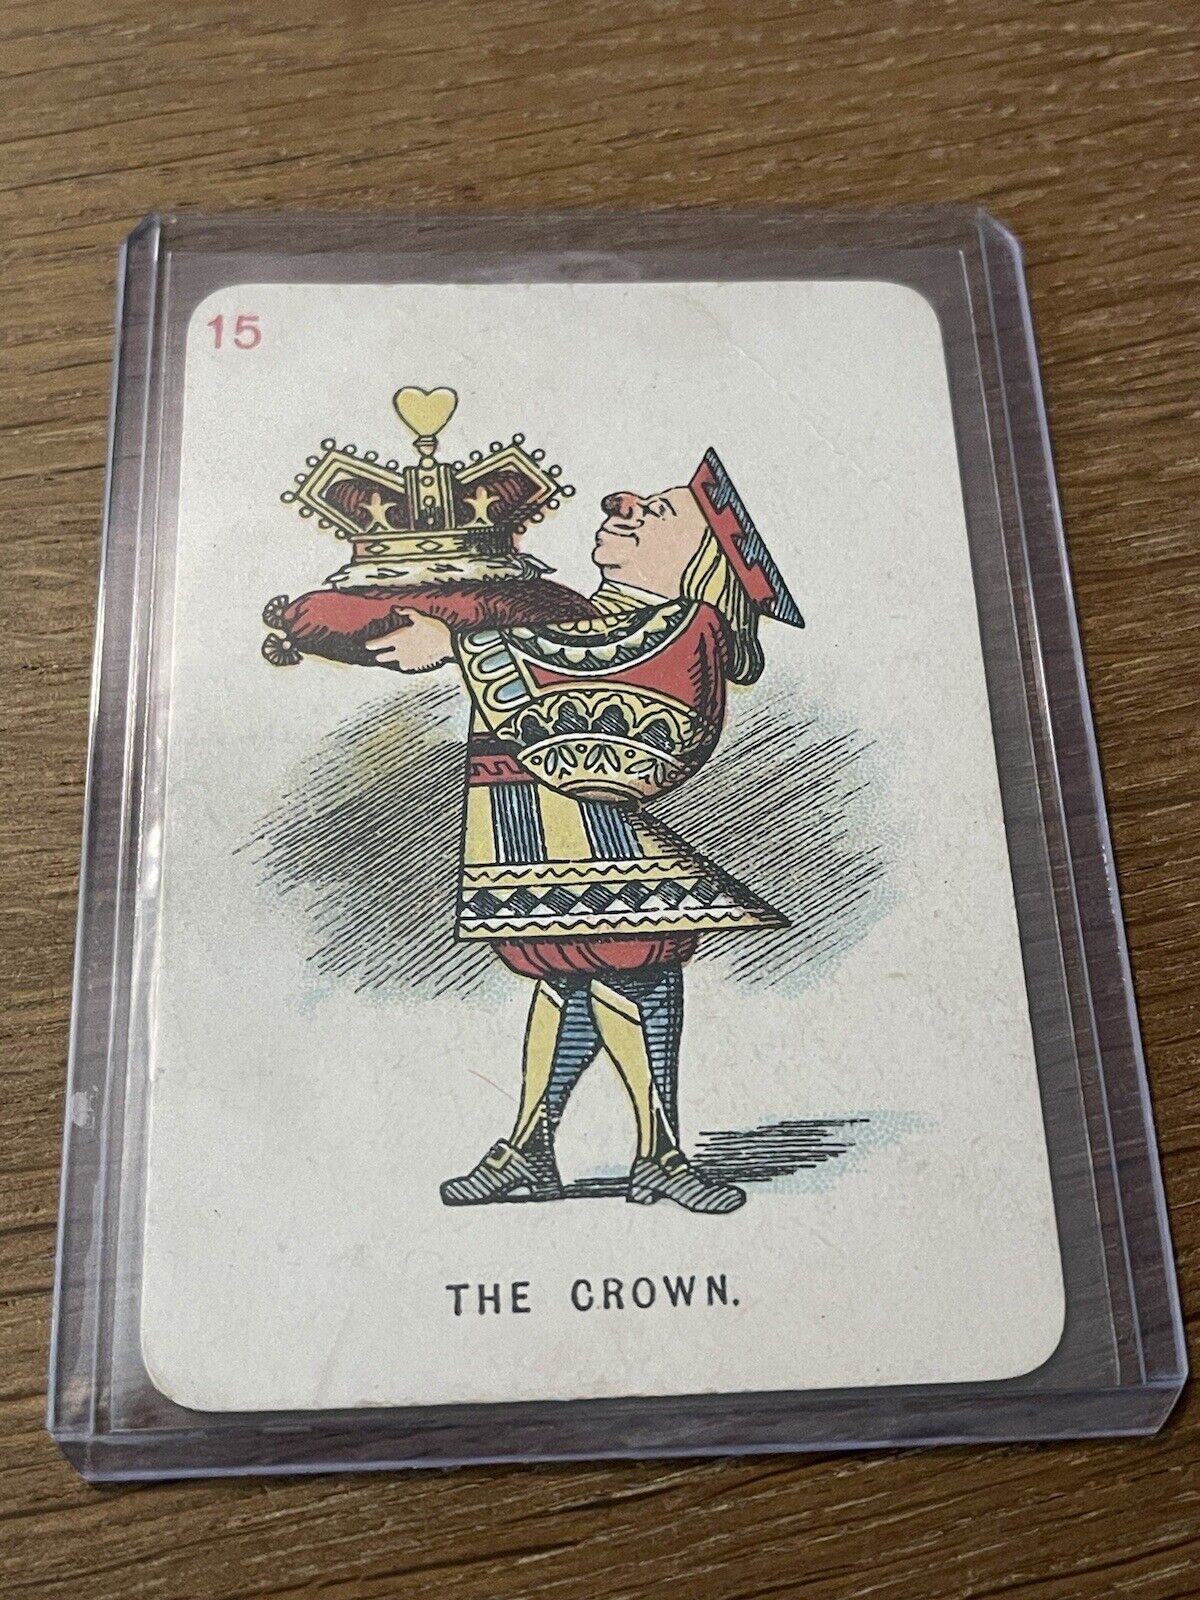 1898 DE LA RUE & CO. LTD. ALICE IN WONDERLAND CARD GAME ANTIQUE PLAYING CARD